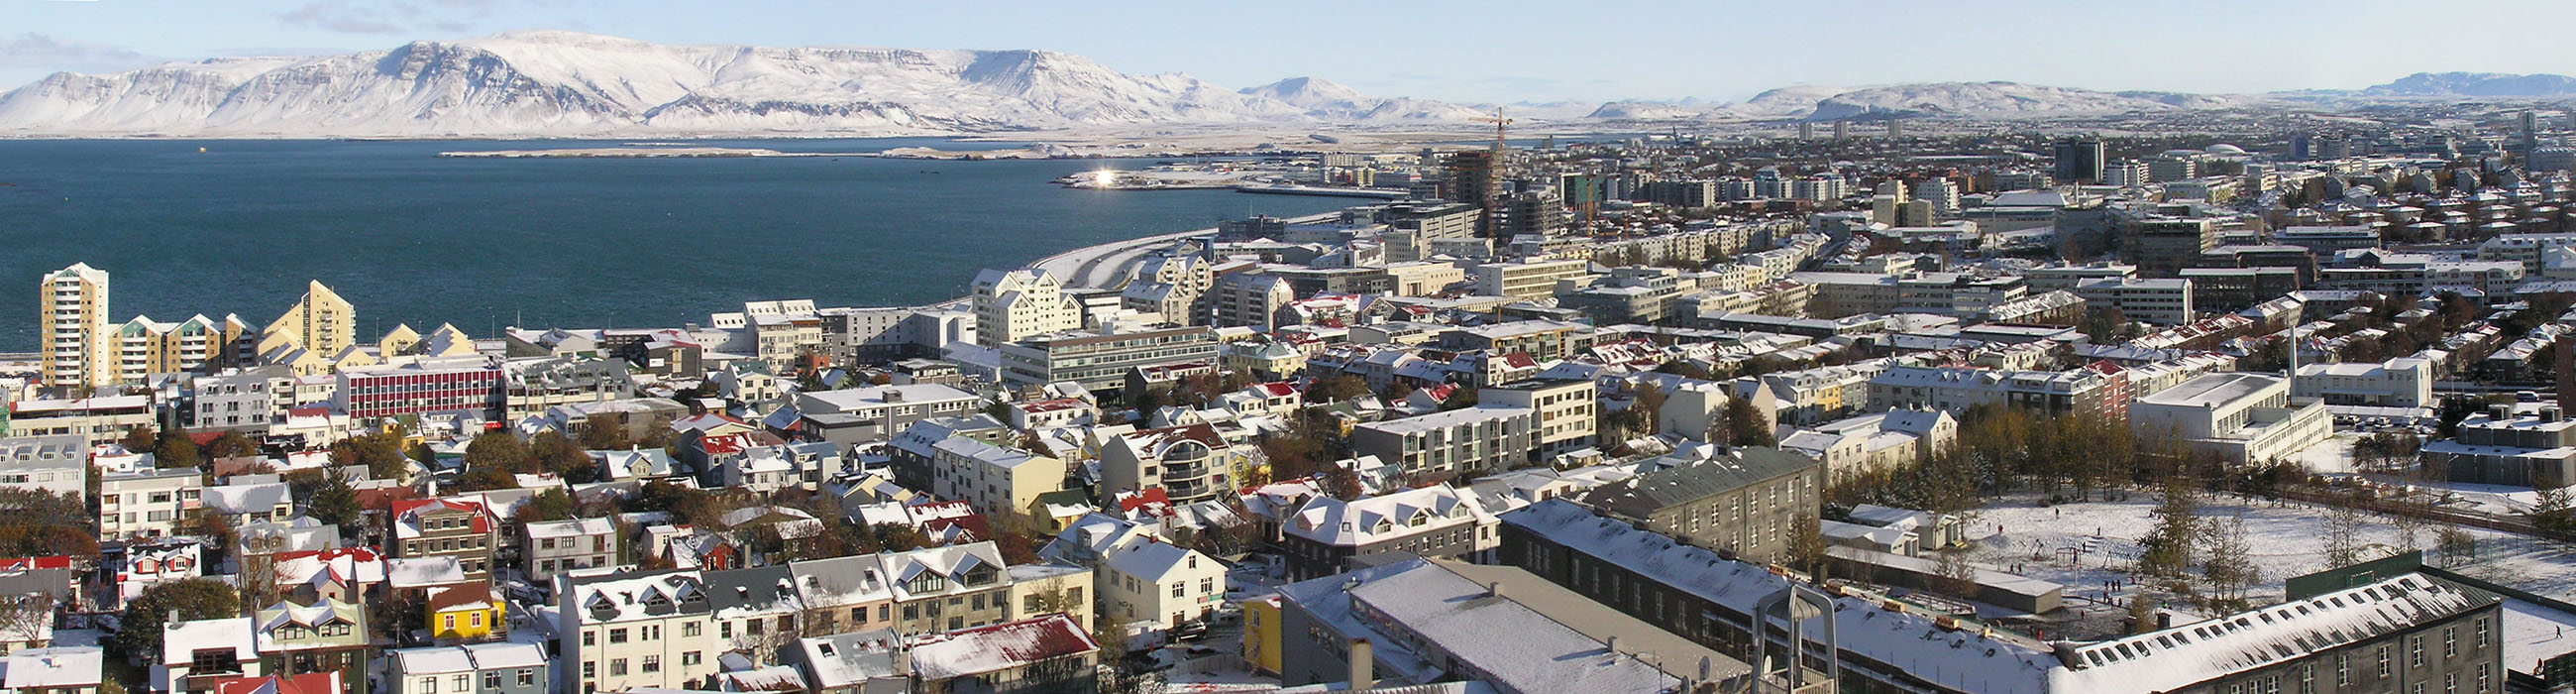 Snowy Rykjavik panorama from Hallgrímskirkja